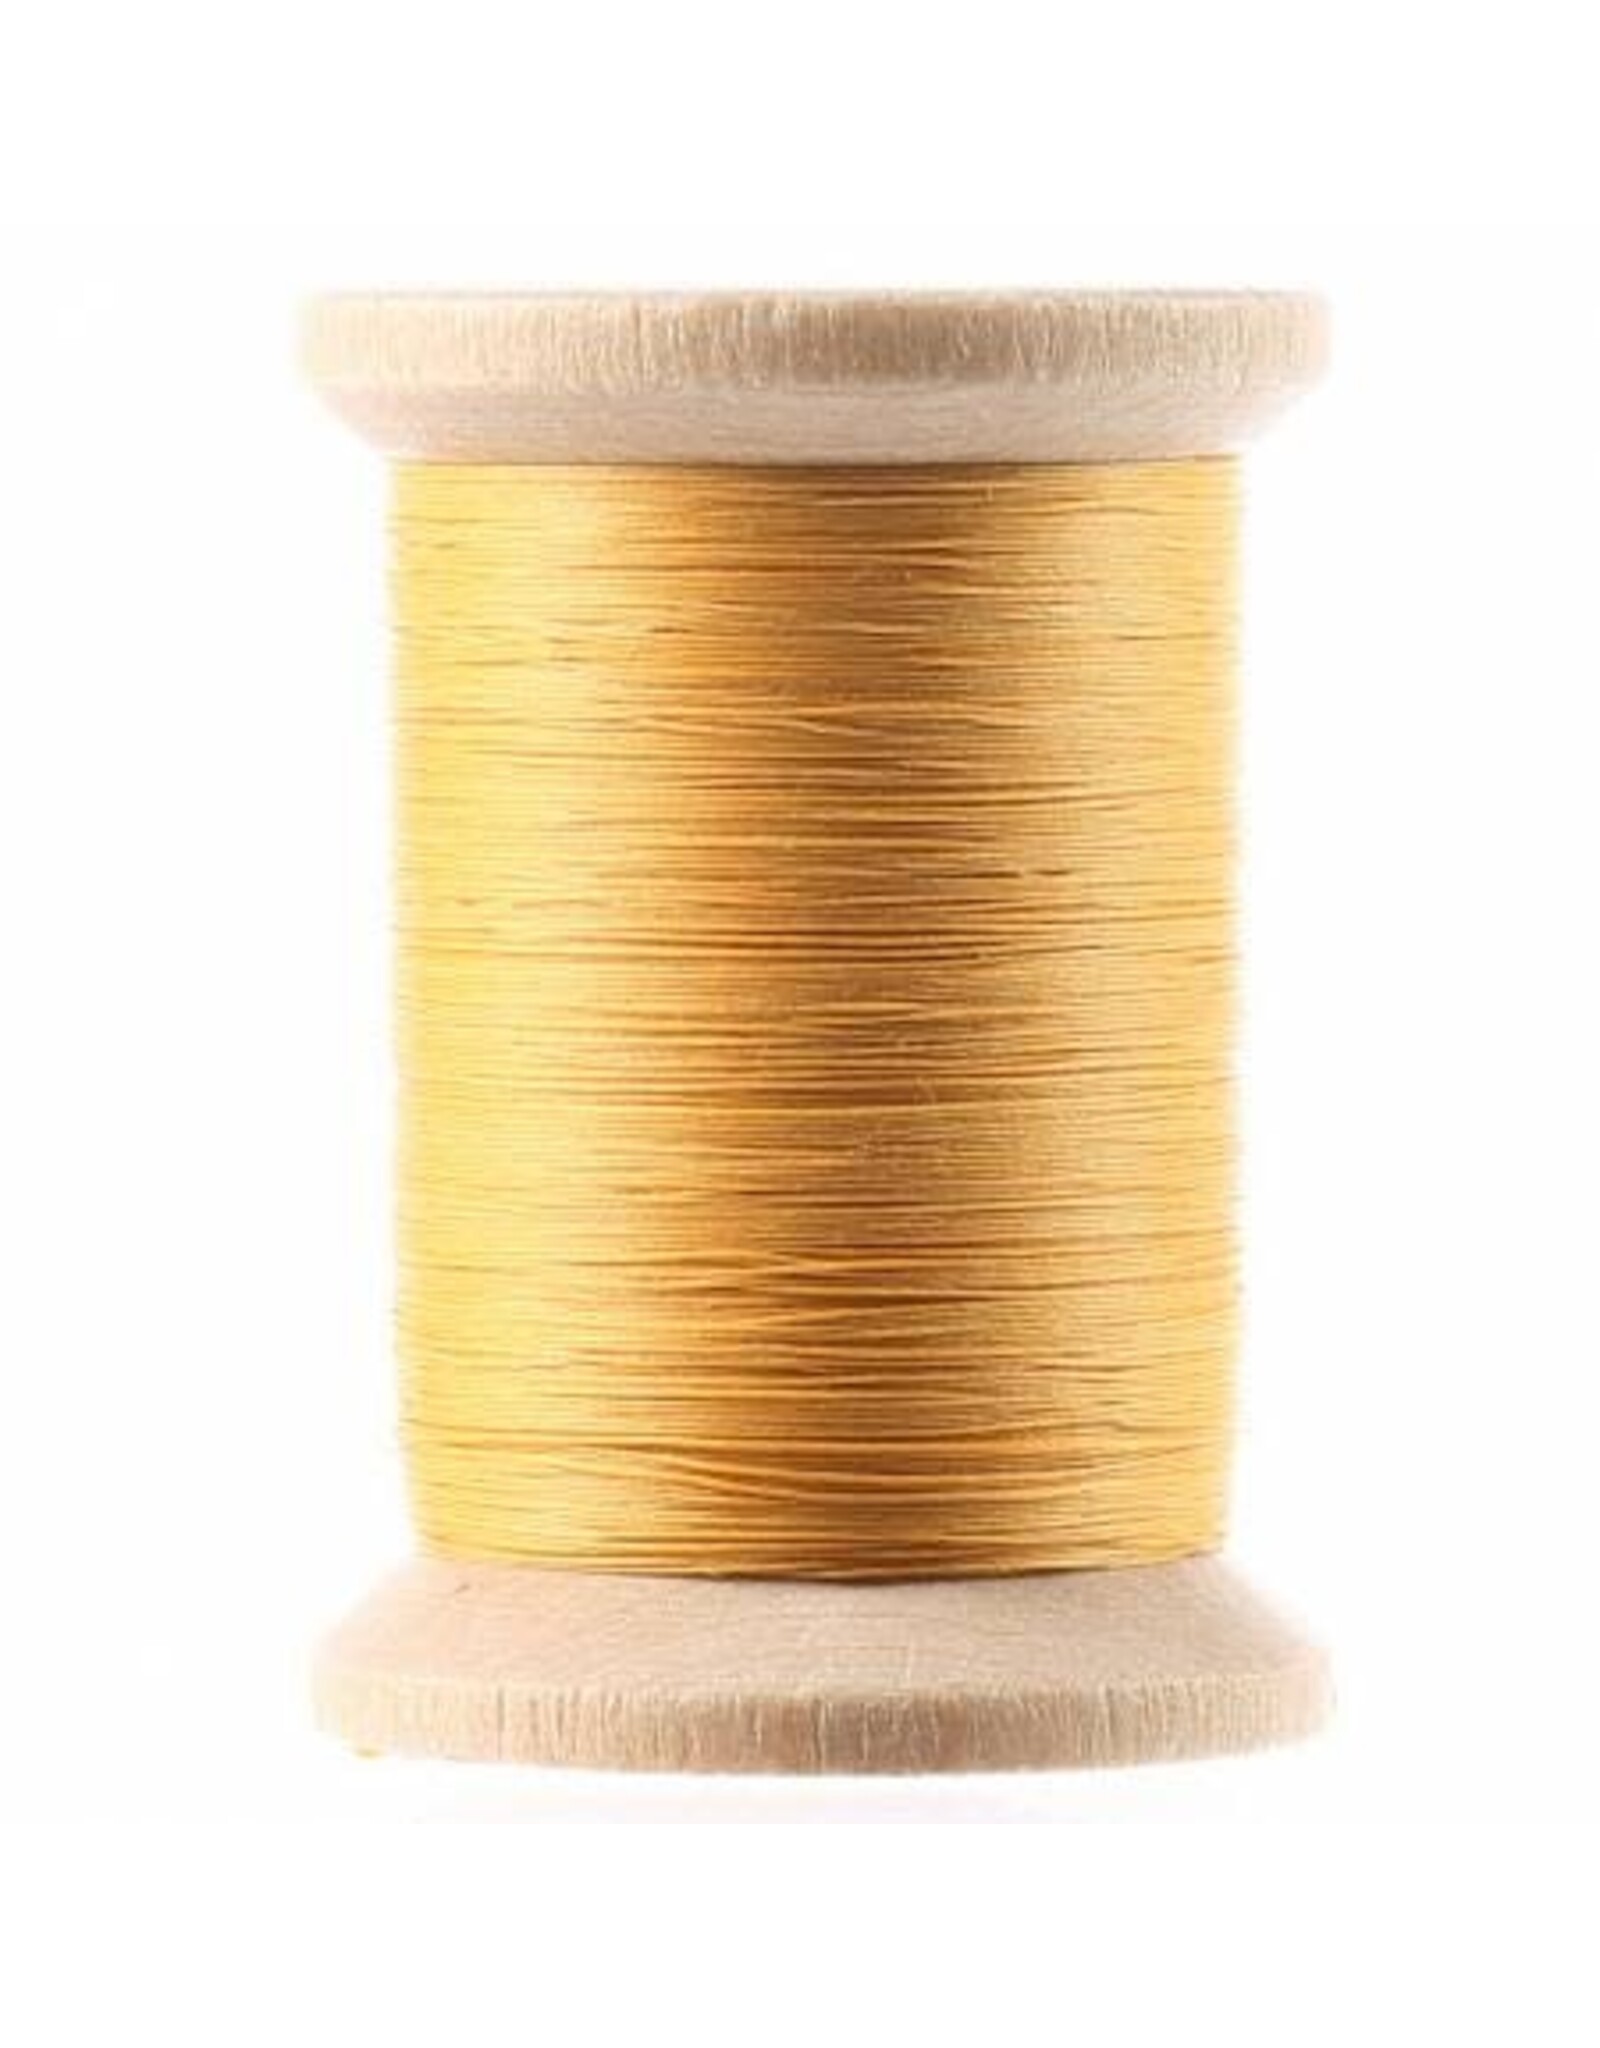 YLI ON ORDER-YLI Cotton Hand Quilting Thread, 007 Gold, 40wt, 3 ply, 500 yd spool